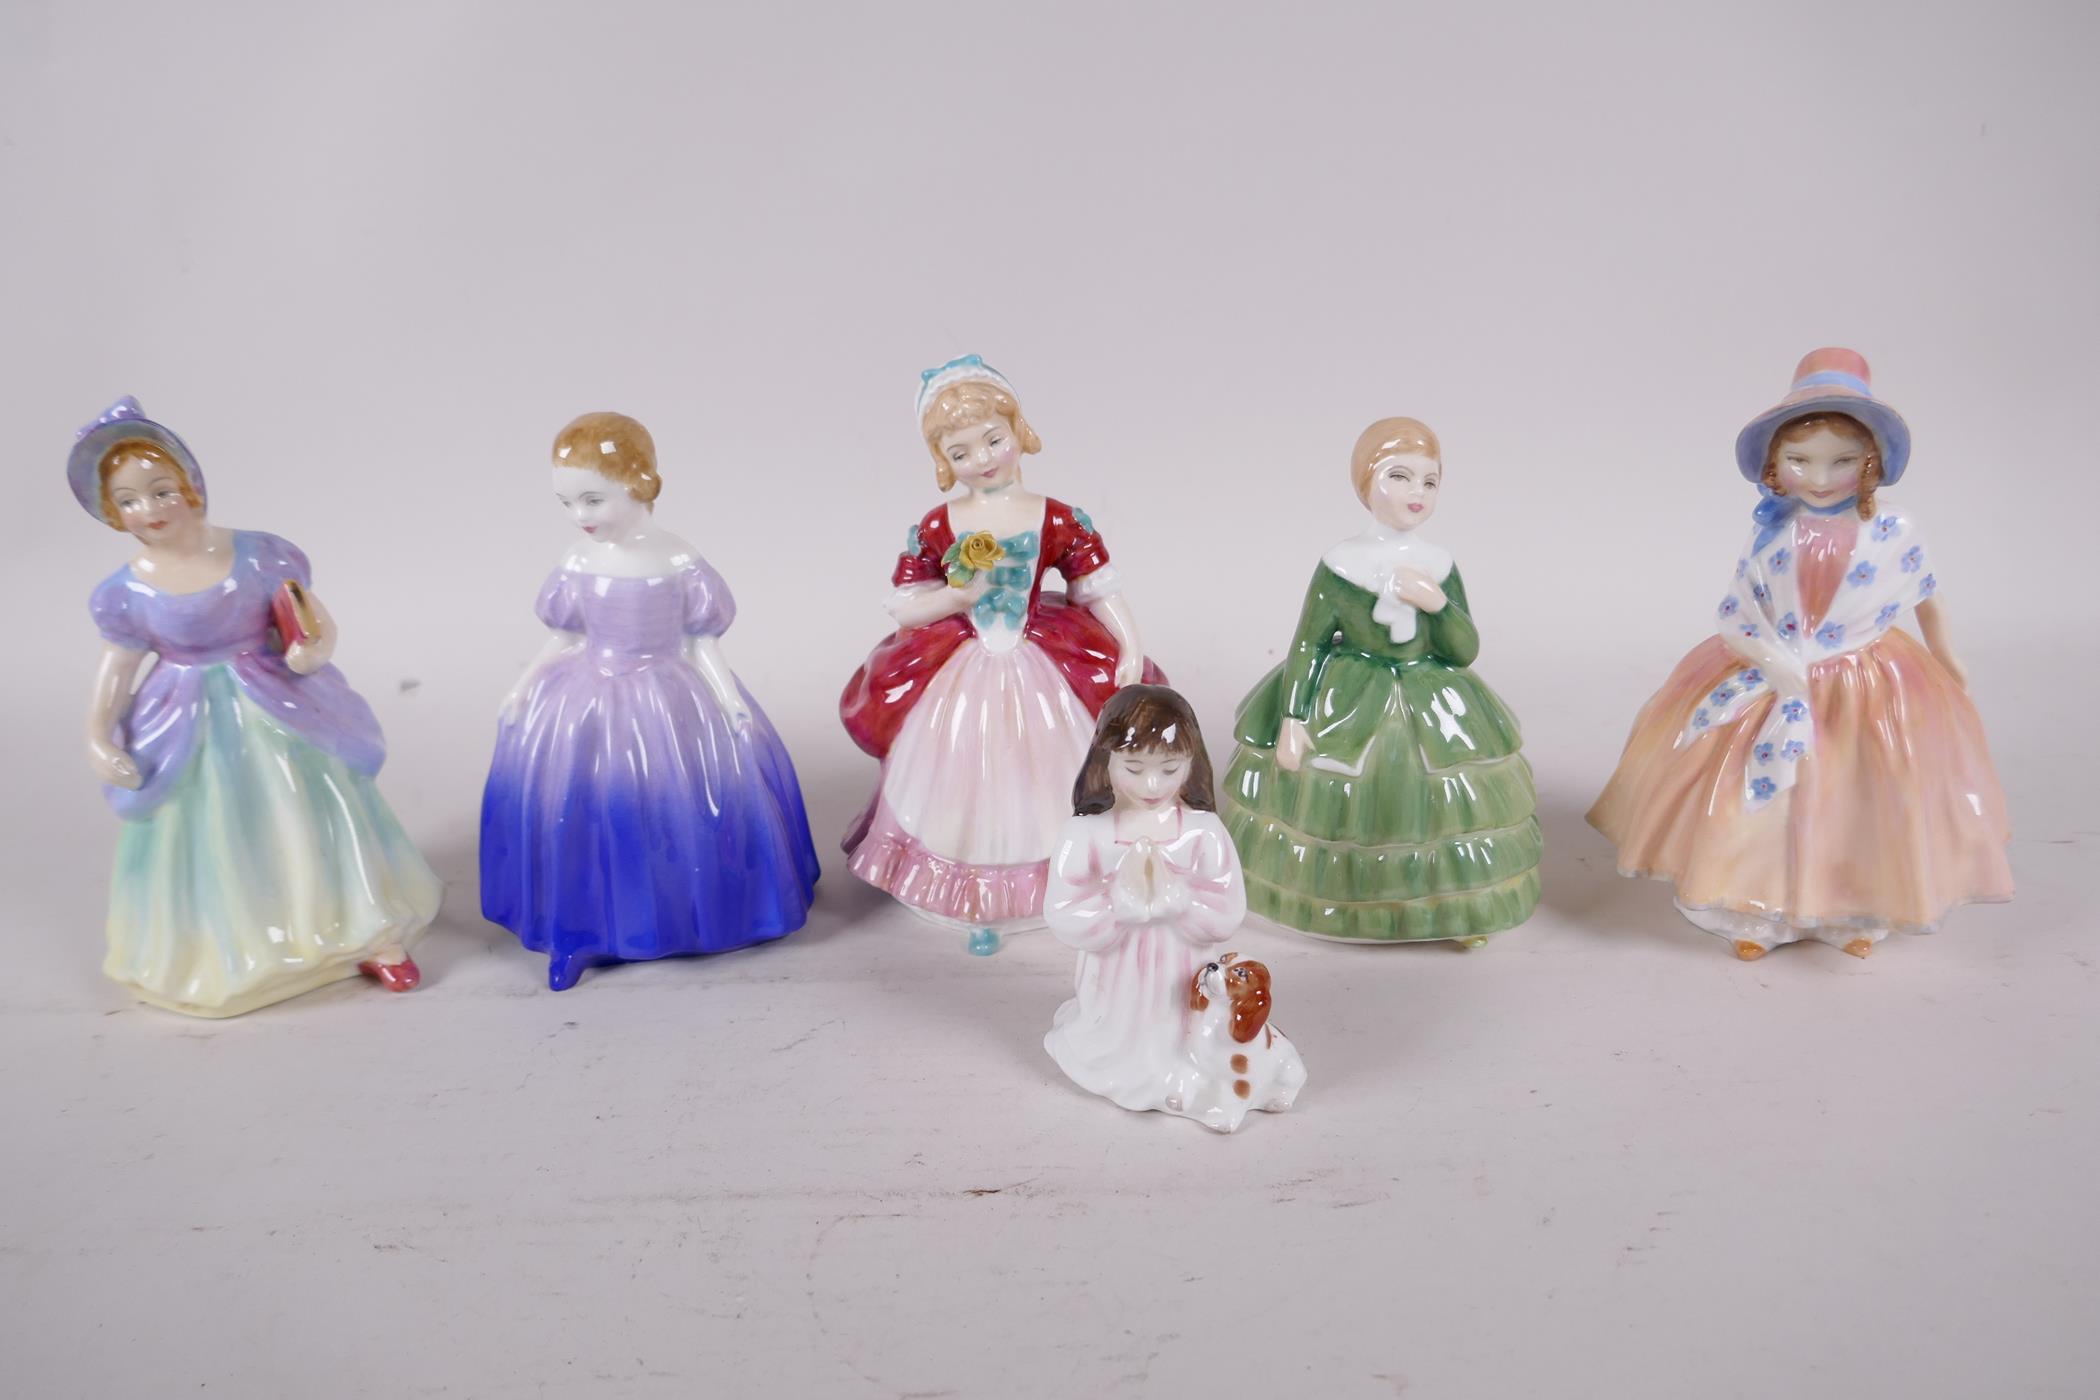 Five Royal Doulton figures of young girls, Valerie HN2107, Belle HN2340, Marie HN1370, Lily